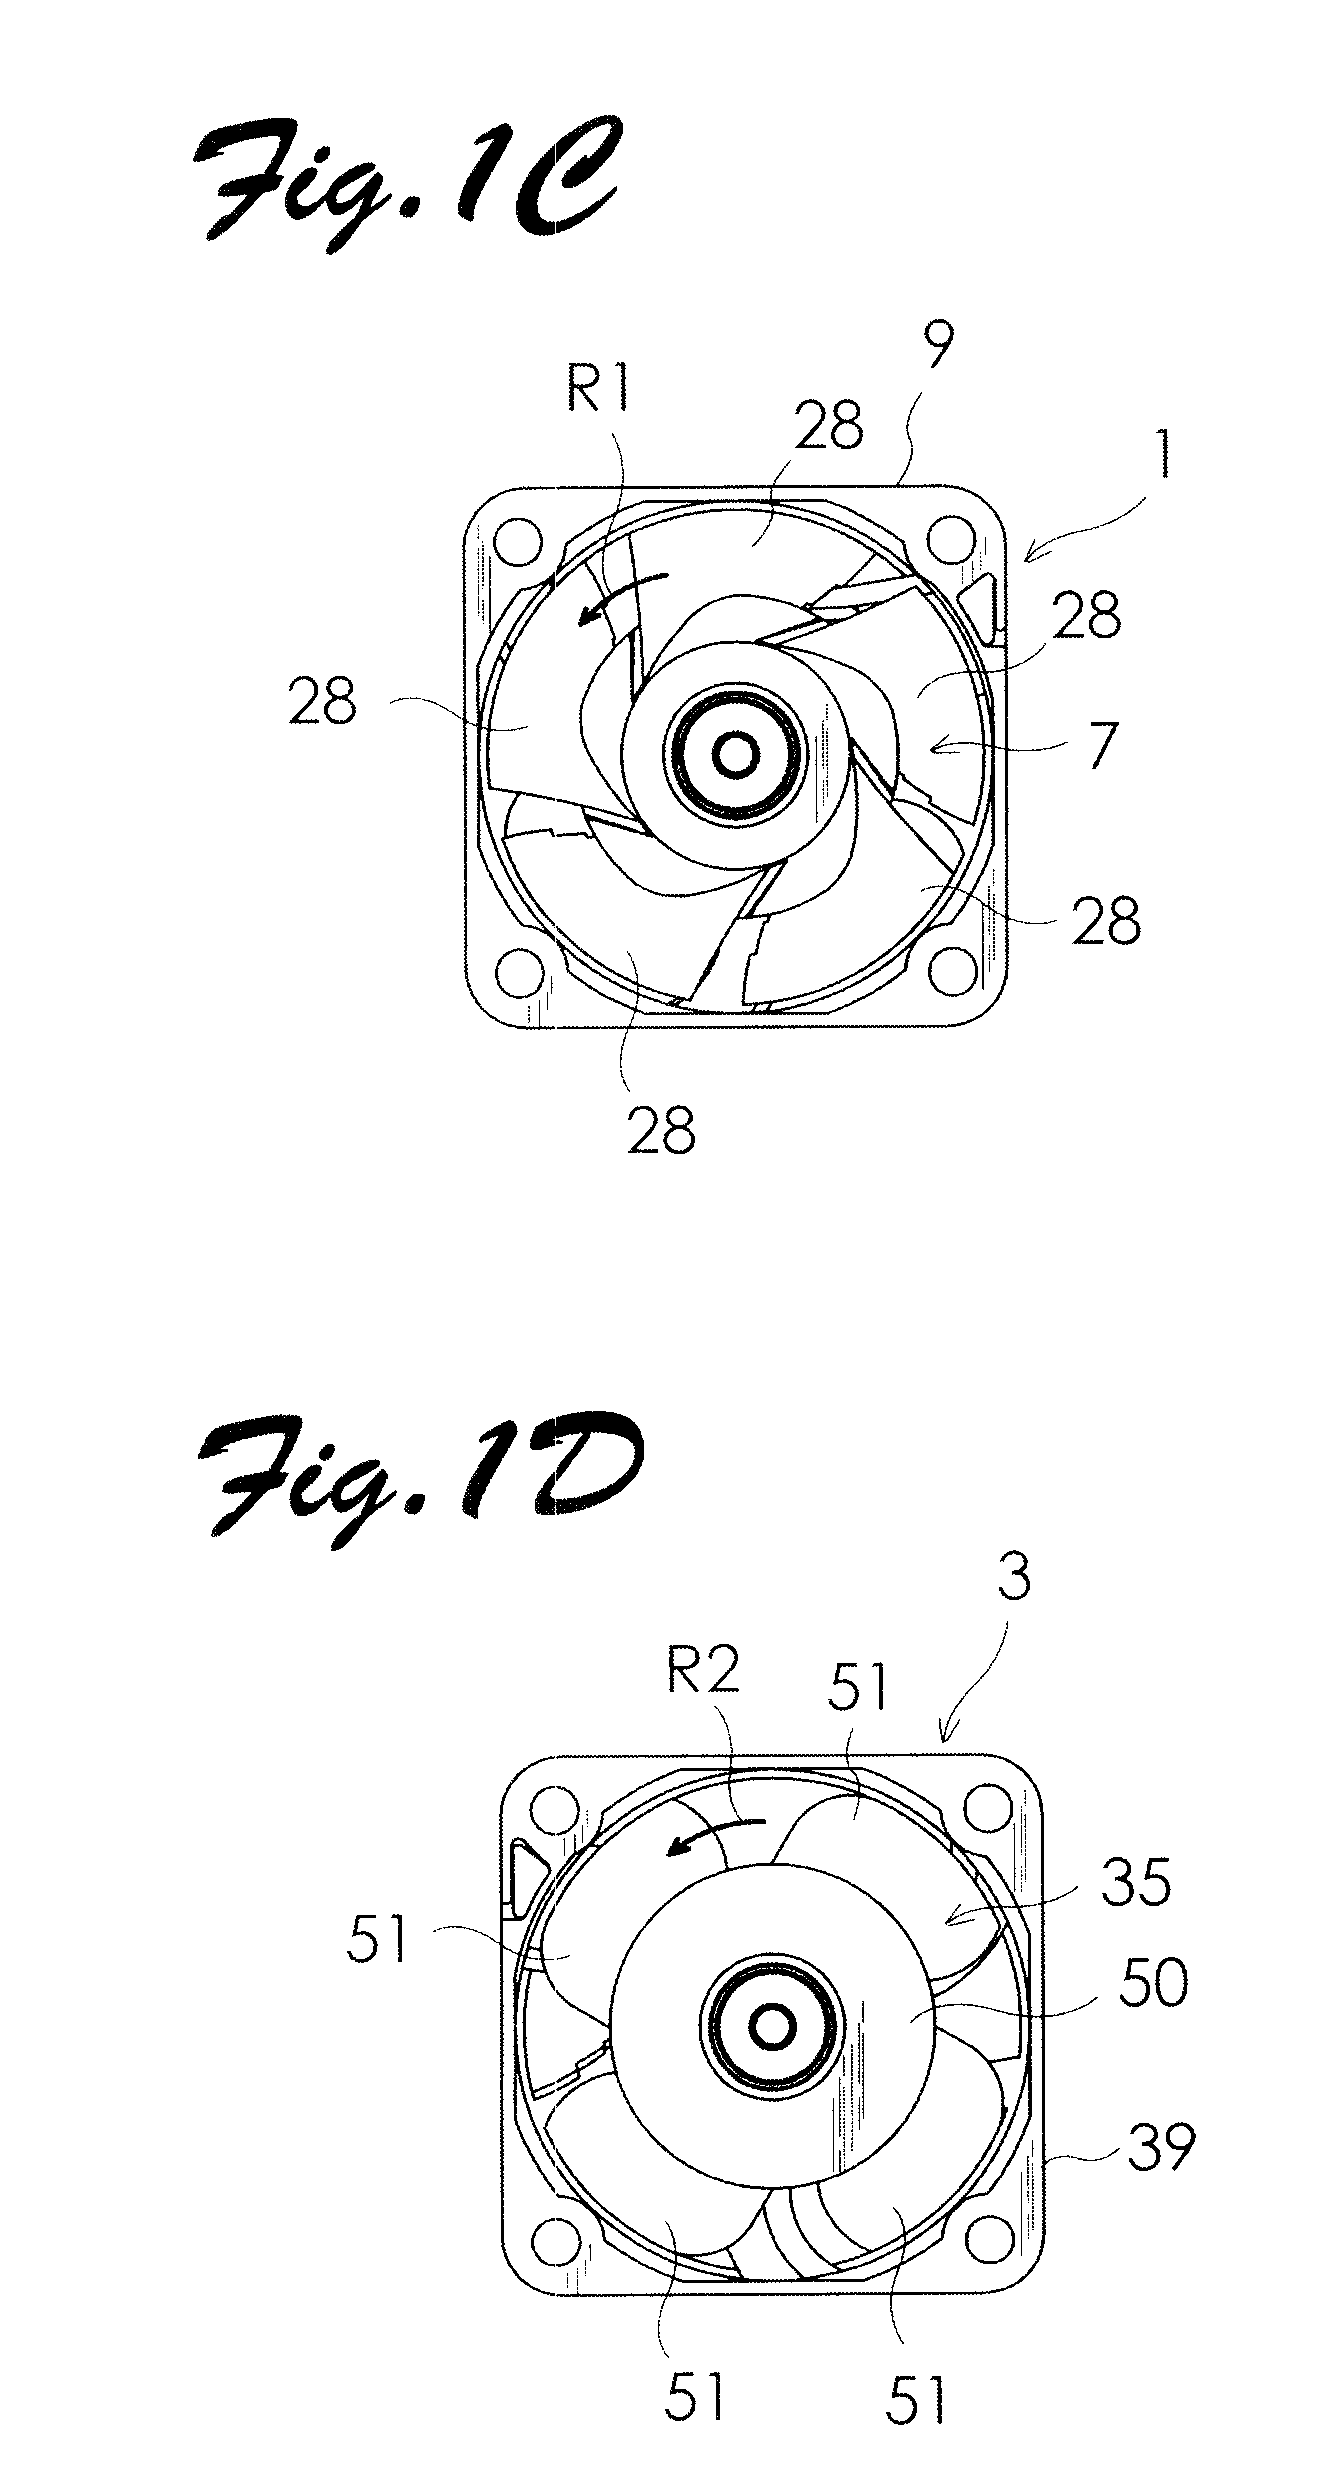 Counter-rotating axial flow fan